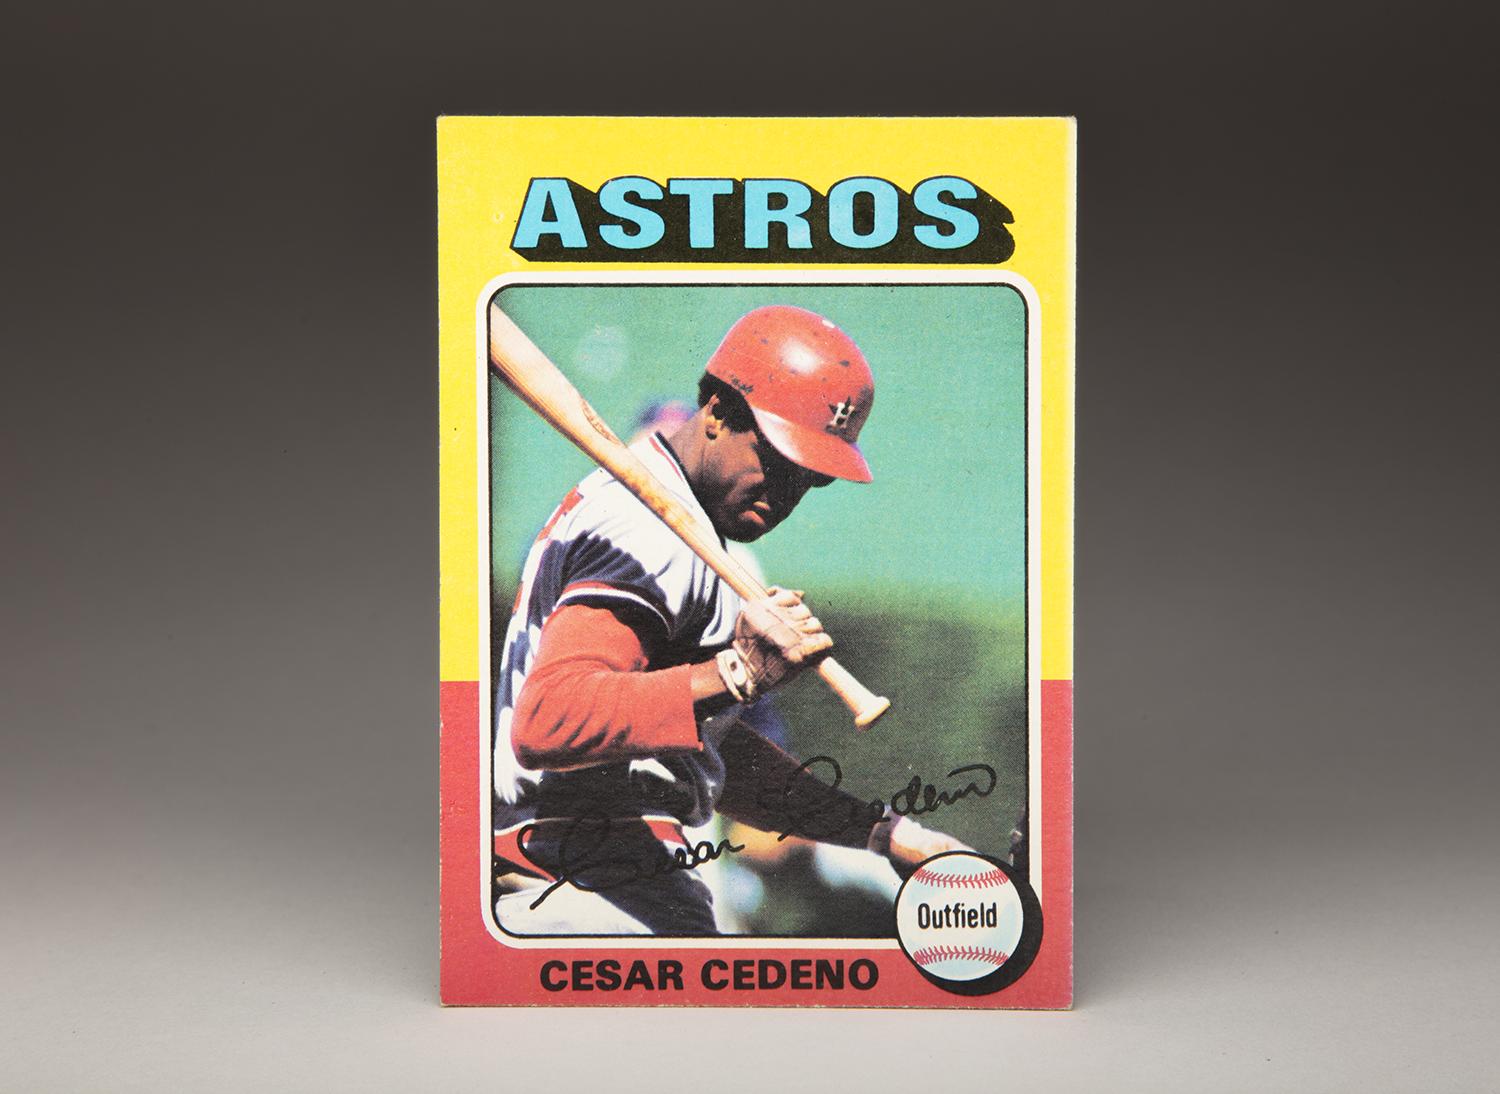 Cesar Cedeno Dominican Baseball Player in Houston Astros T-Shirt